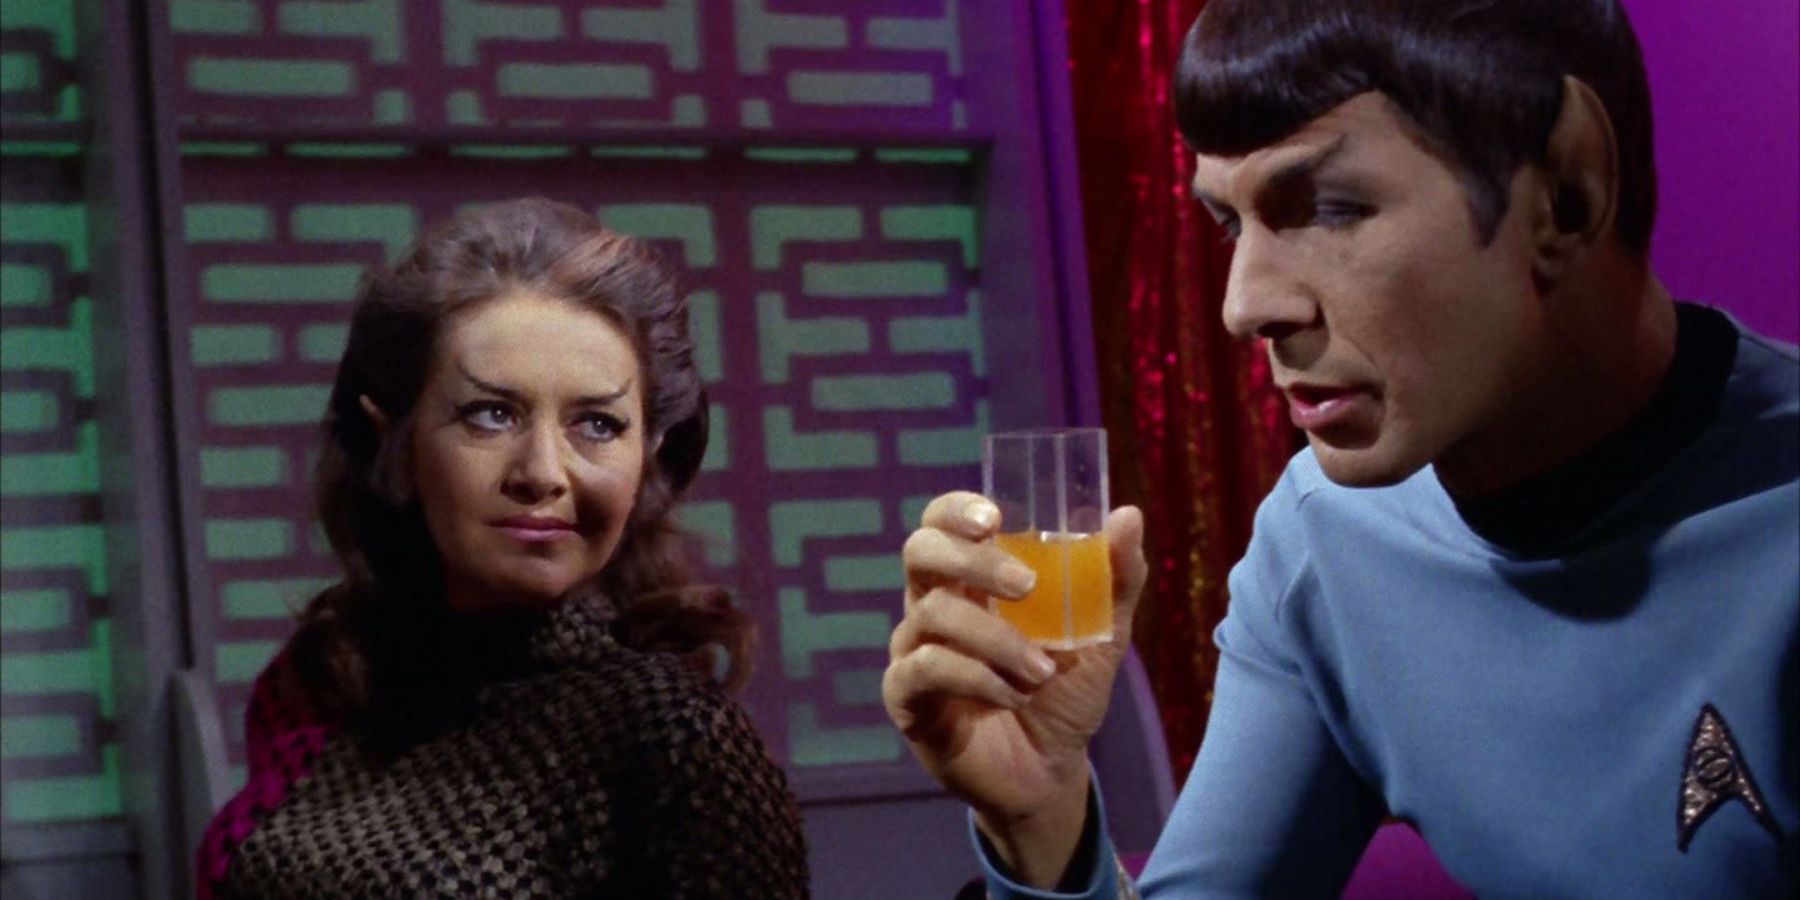 Spock with a Romulan woman The Enterprise Incident screenshot